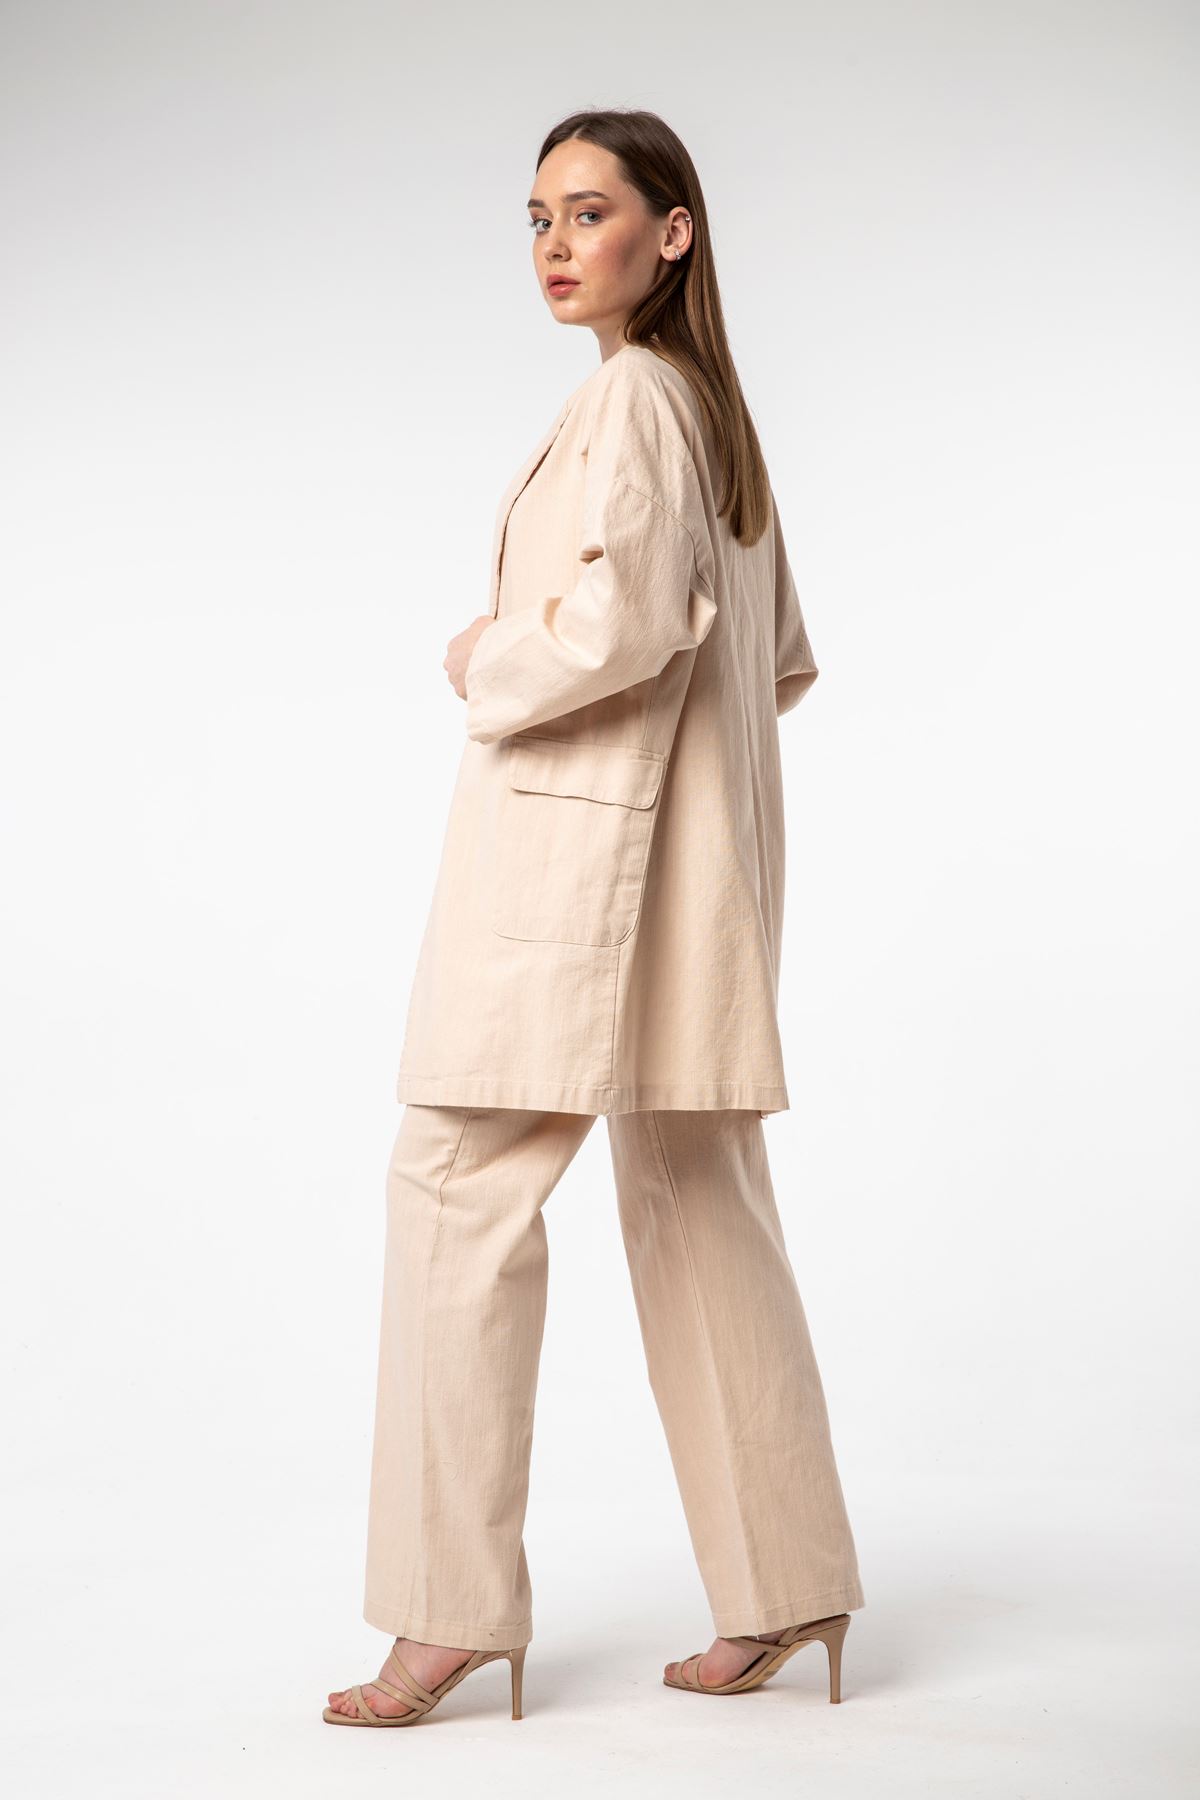 Linen Fabric Long Sleeve Revere Collar Below Hip Oversize Women Jacket - Beige 